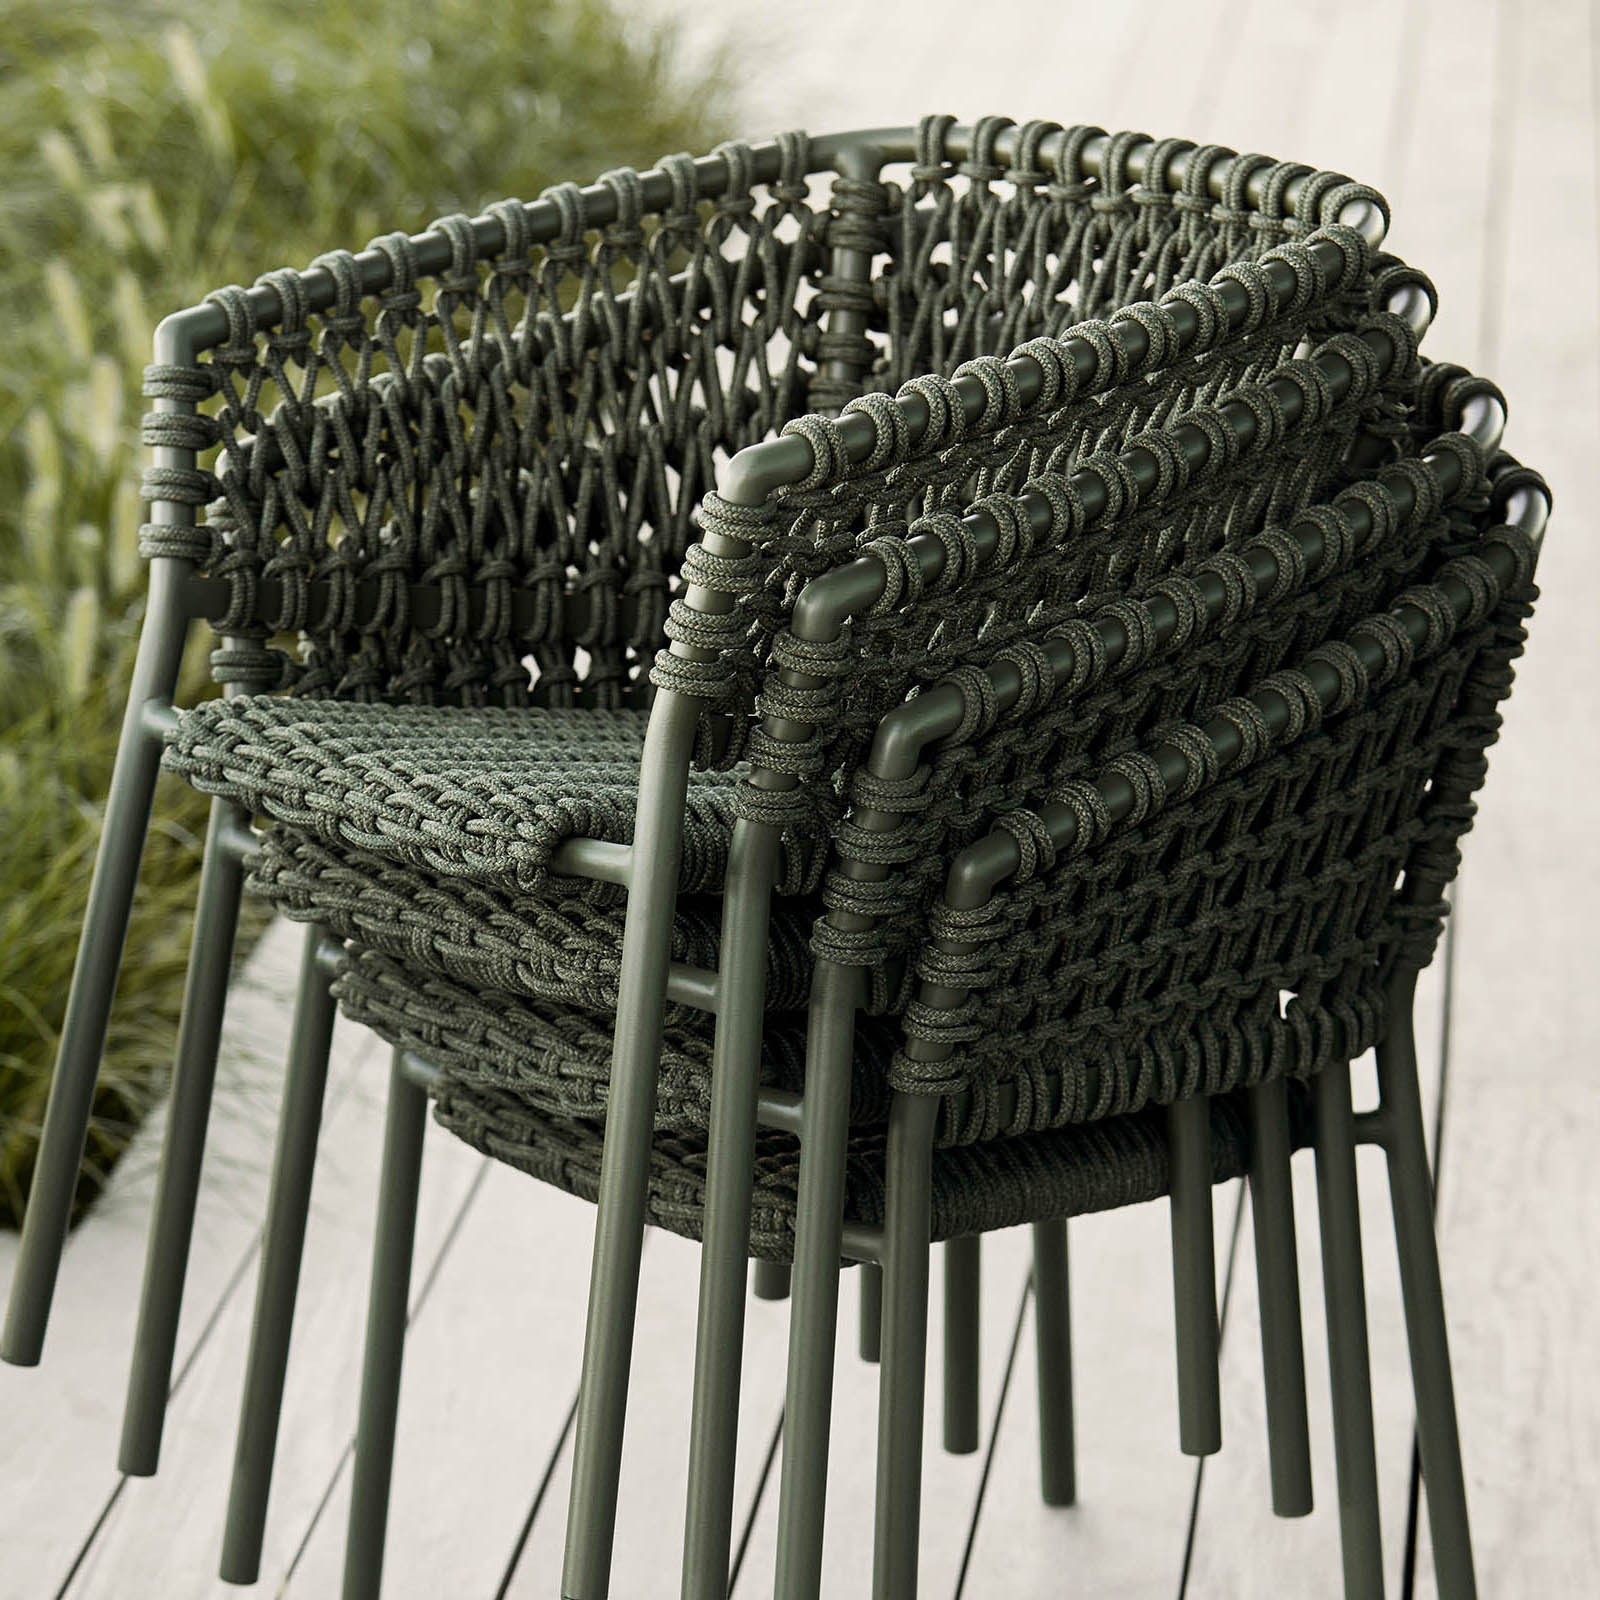 Ocean Stuhl aus Aluminium in Natural mit Kissen aus Cane-line Wove in Dark Bordeaux